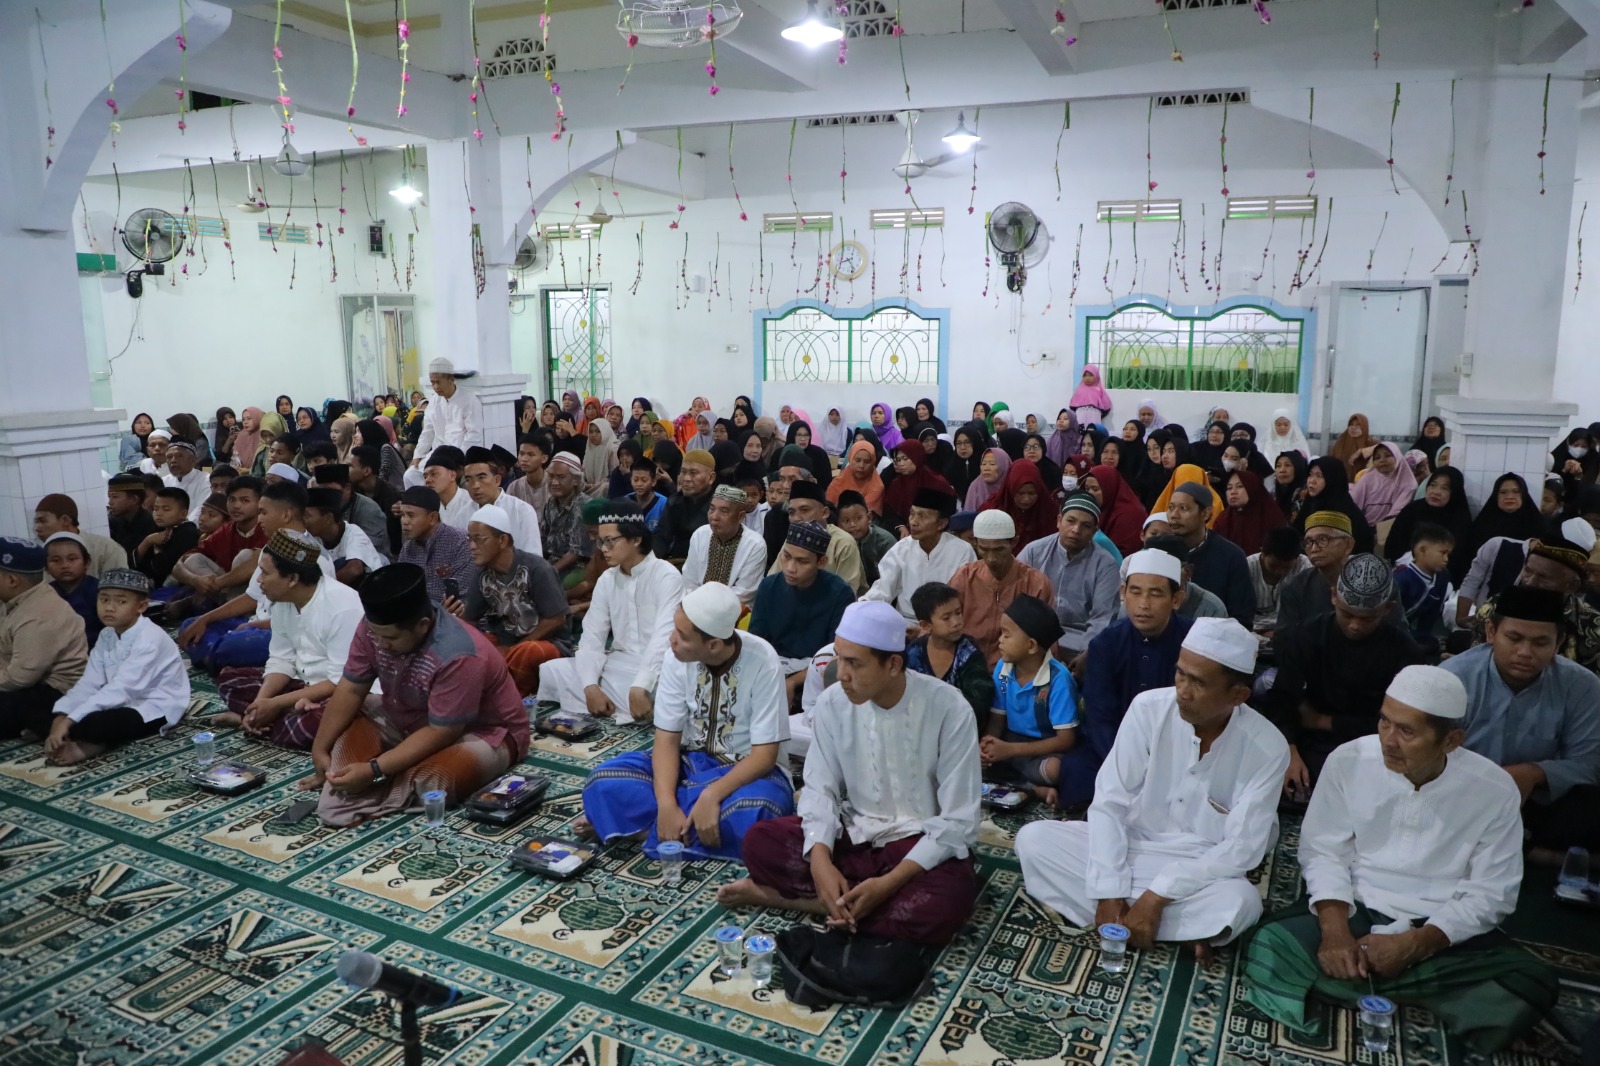  Masjid Jami' Assalam Makrayu Gelar Maulid Nabi, Diikuti Ratusan Jemaah